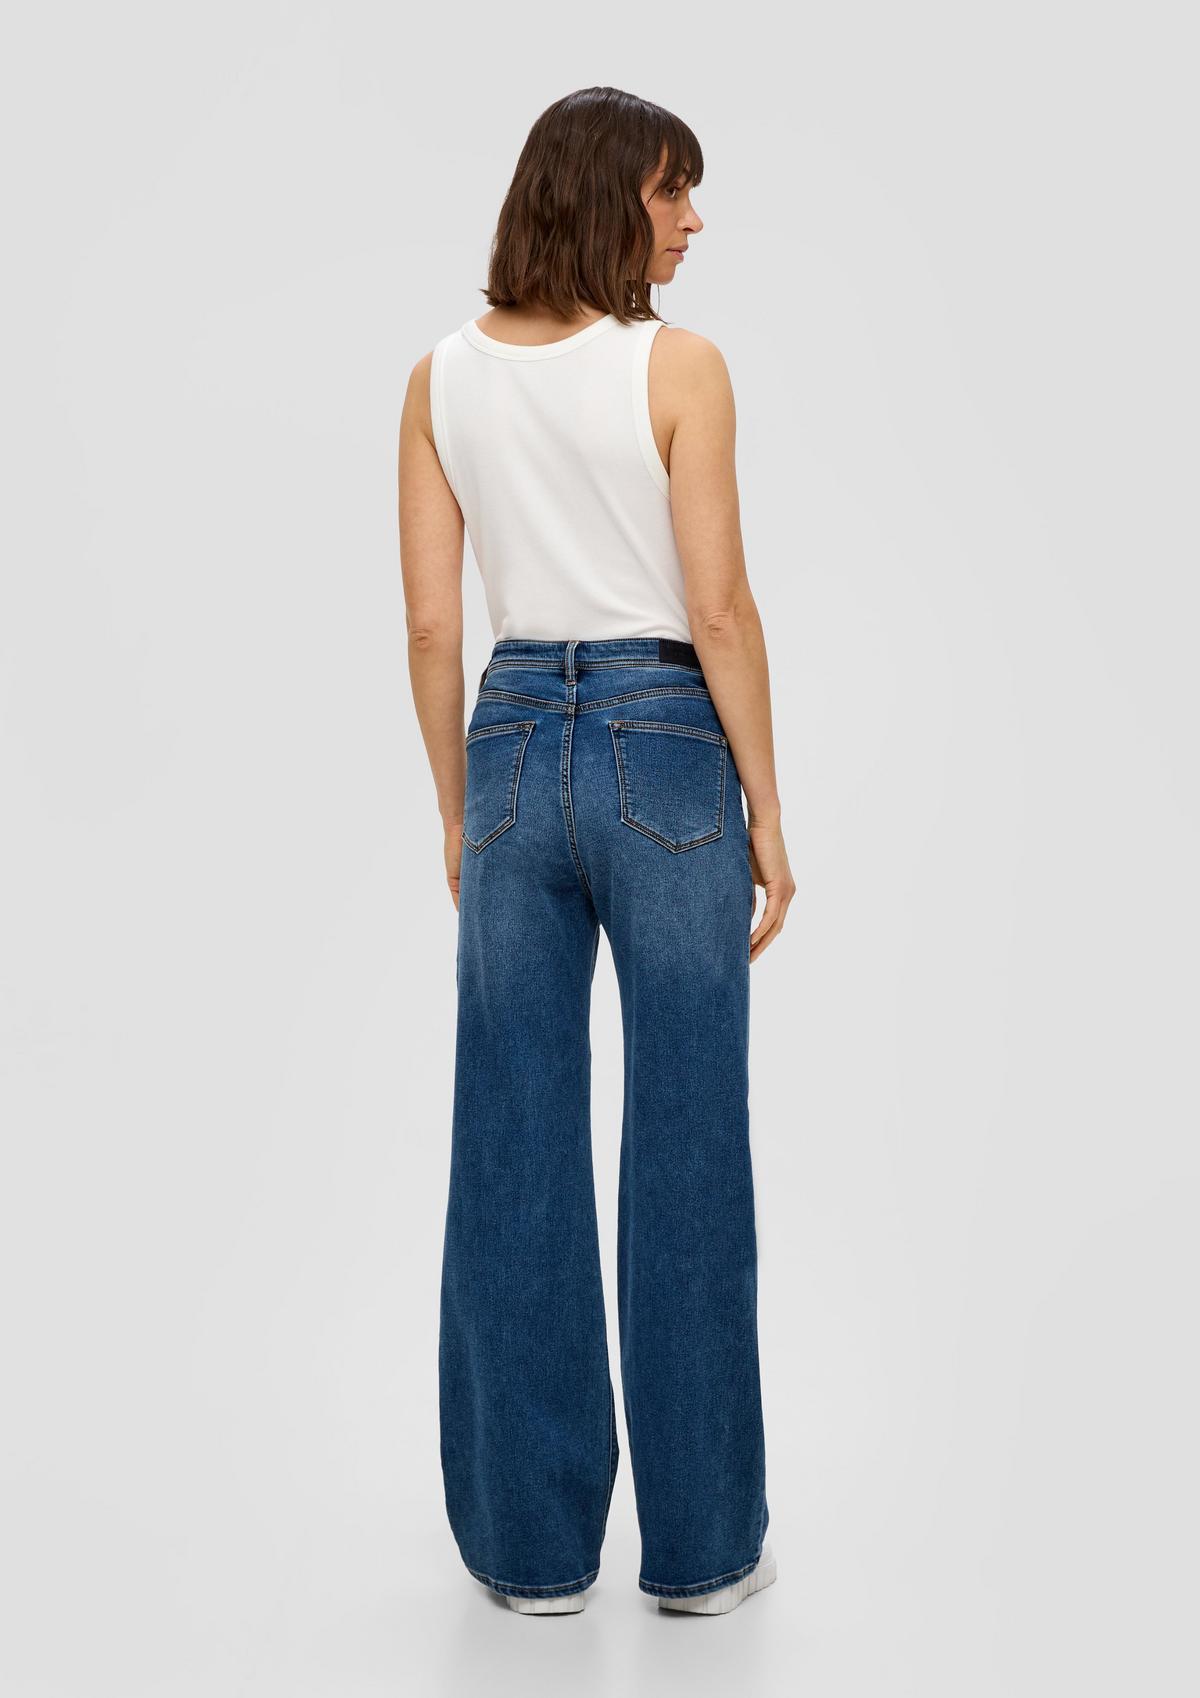 s.Oliver Suri Jeans / regular fit / high rise / wide leg / cotton blend